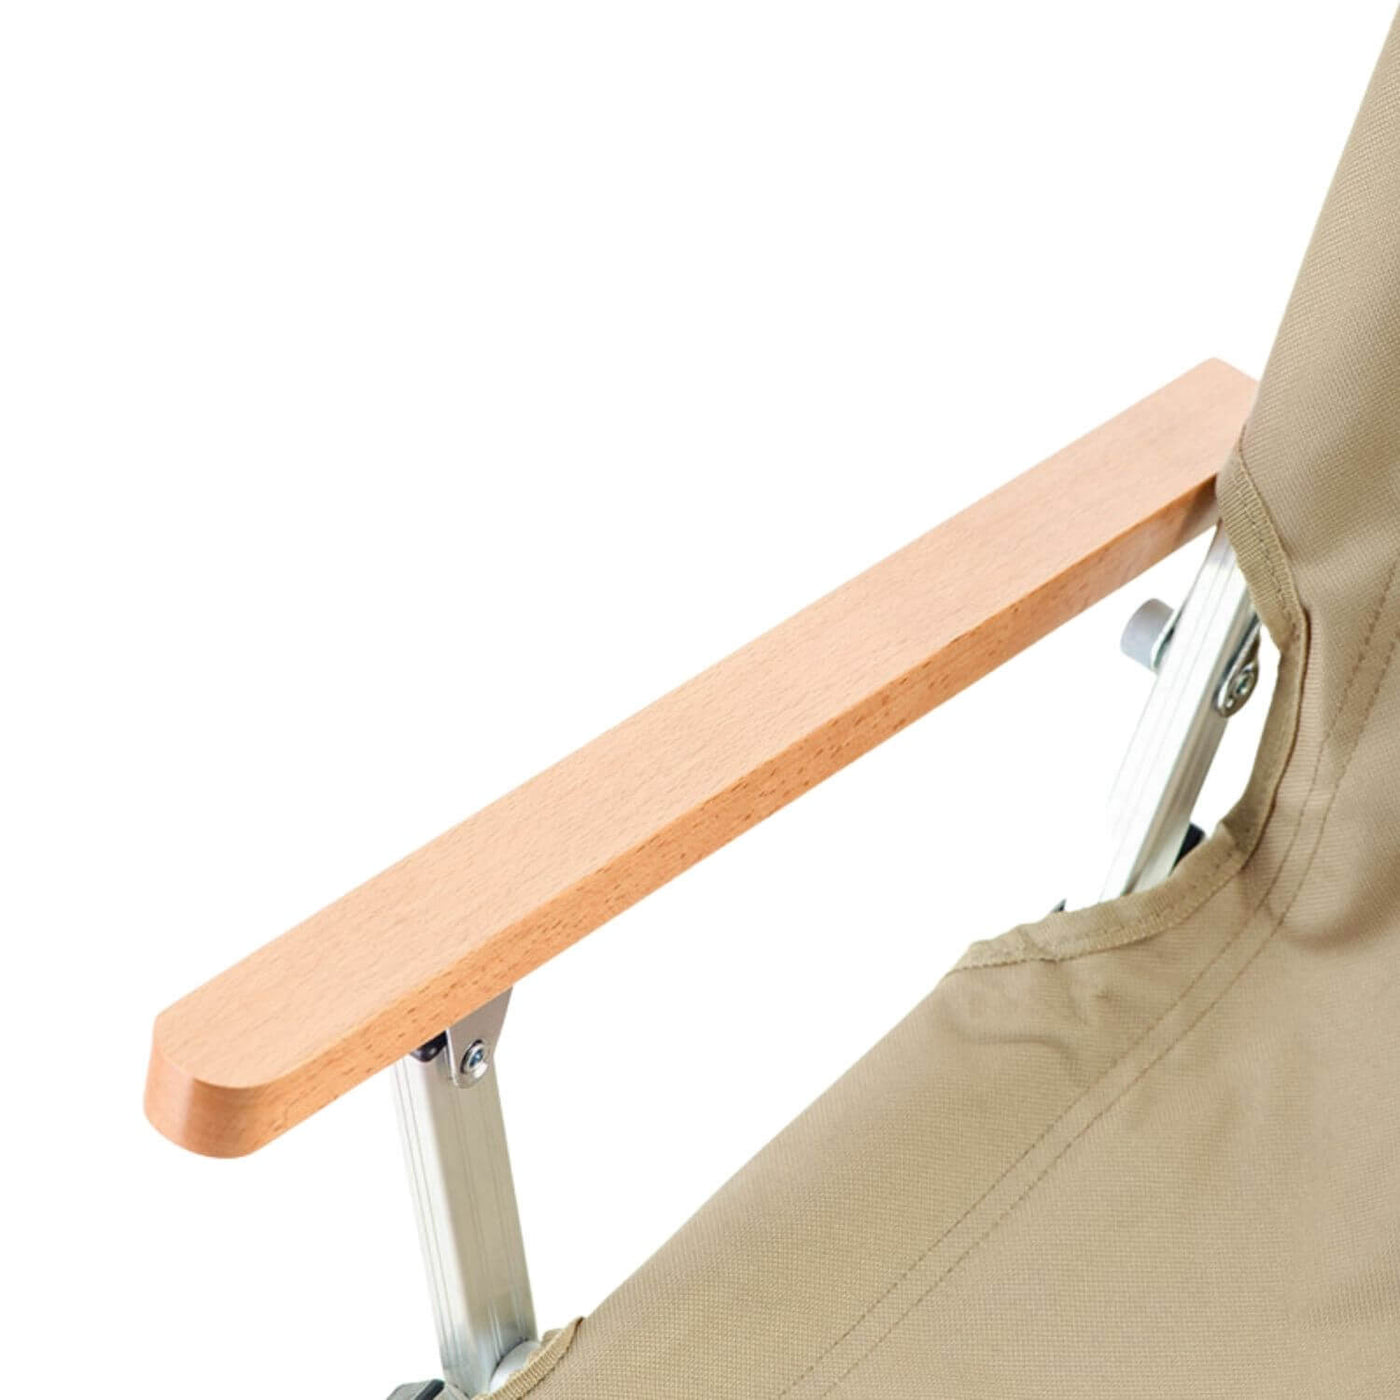 Folding chair